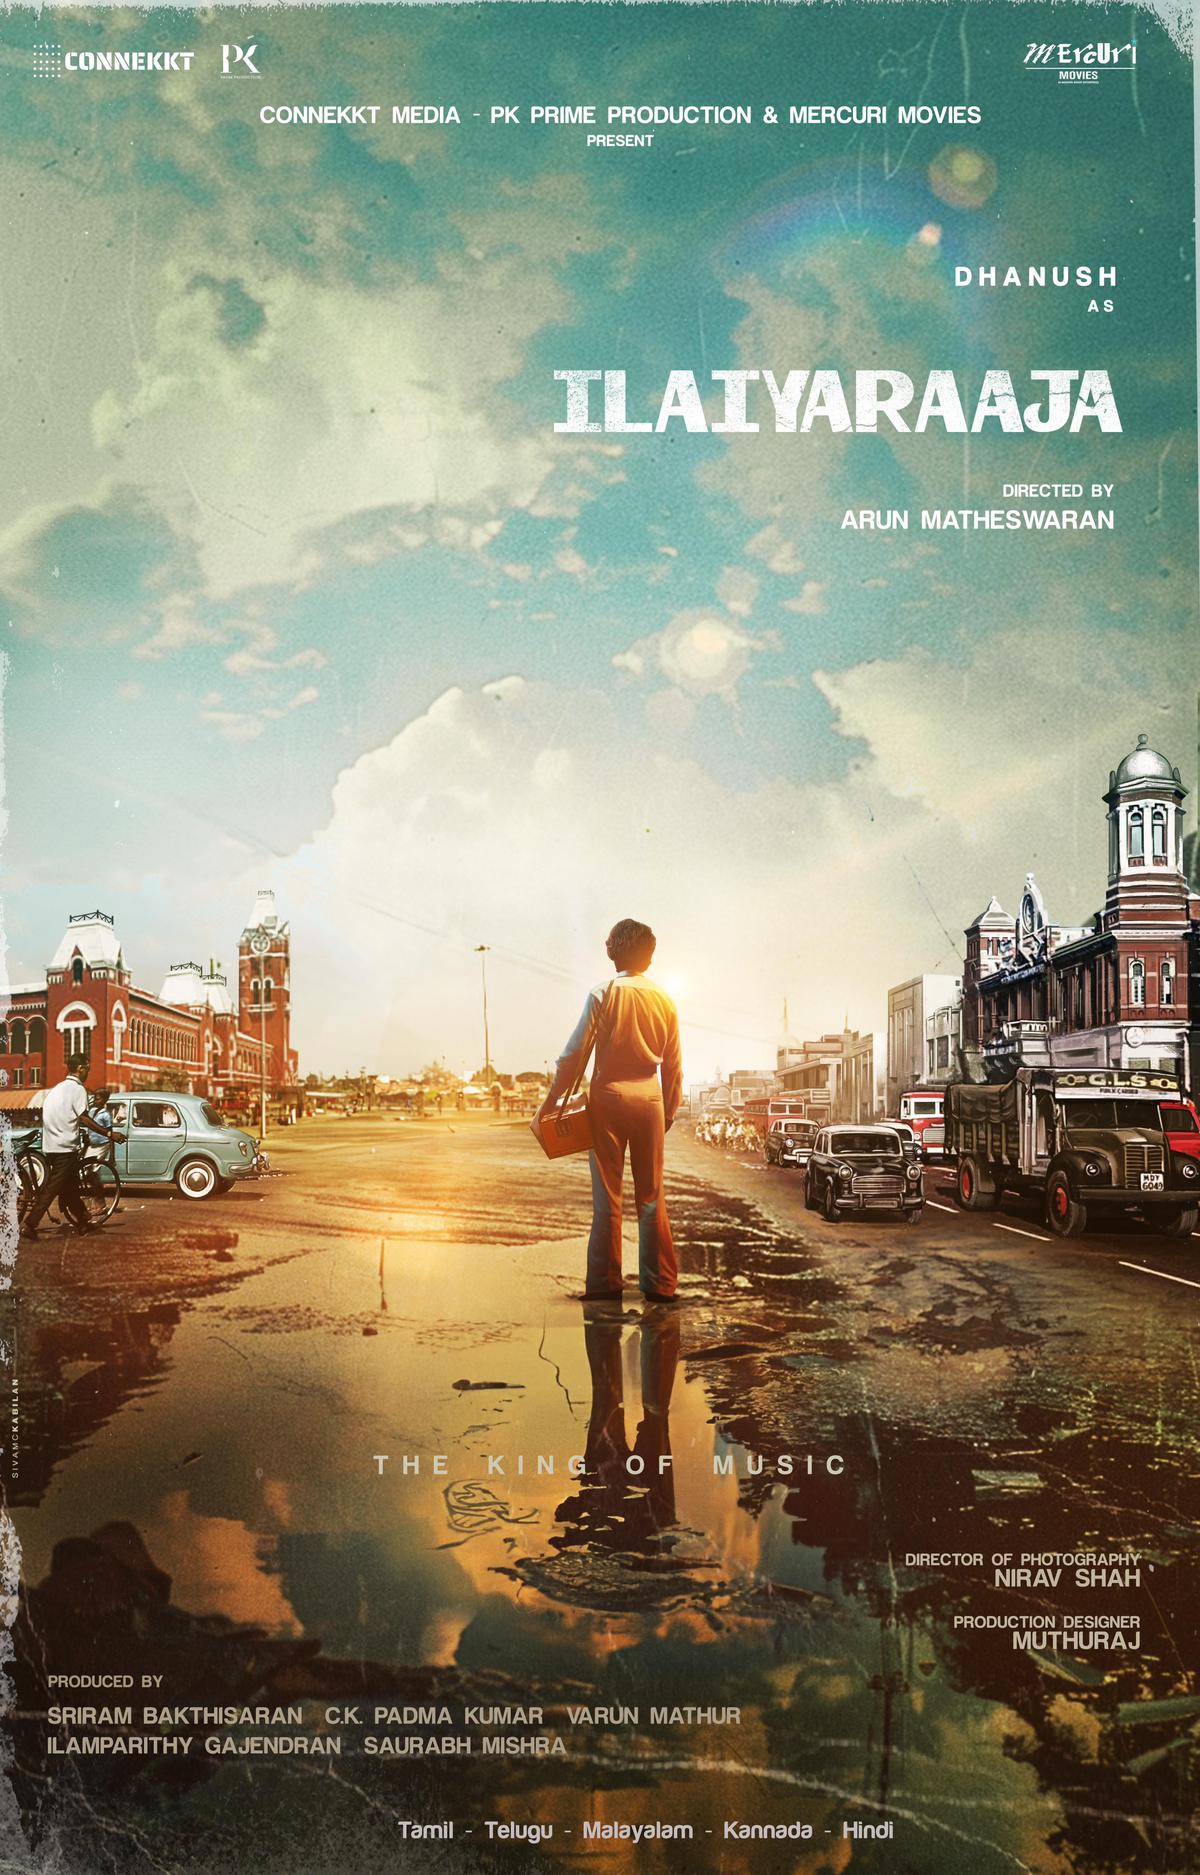 The first-look poster of Ilaiyaraaja’s biopic